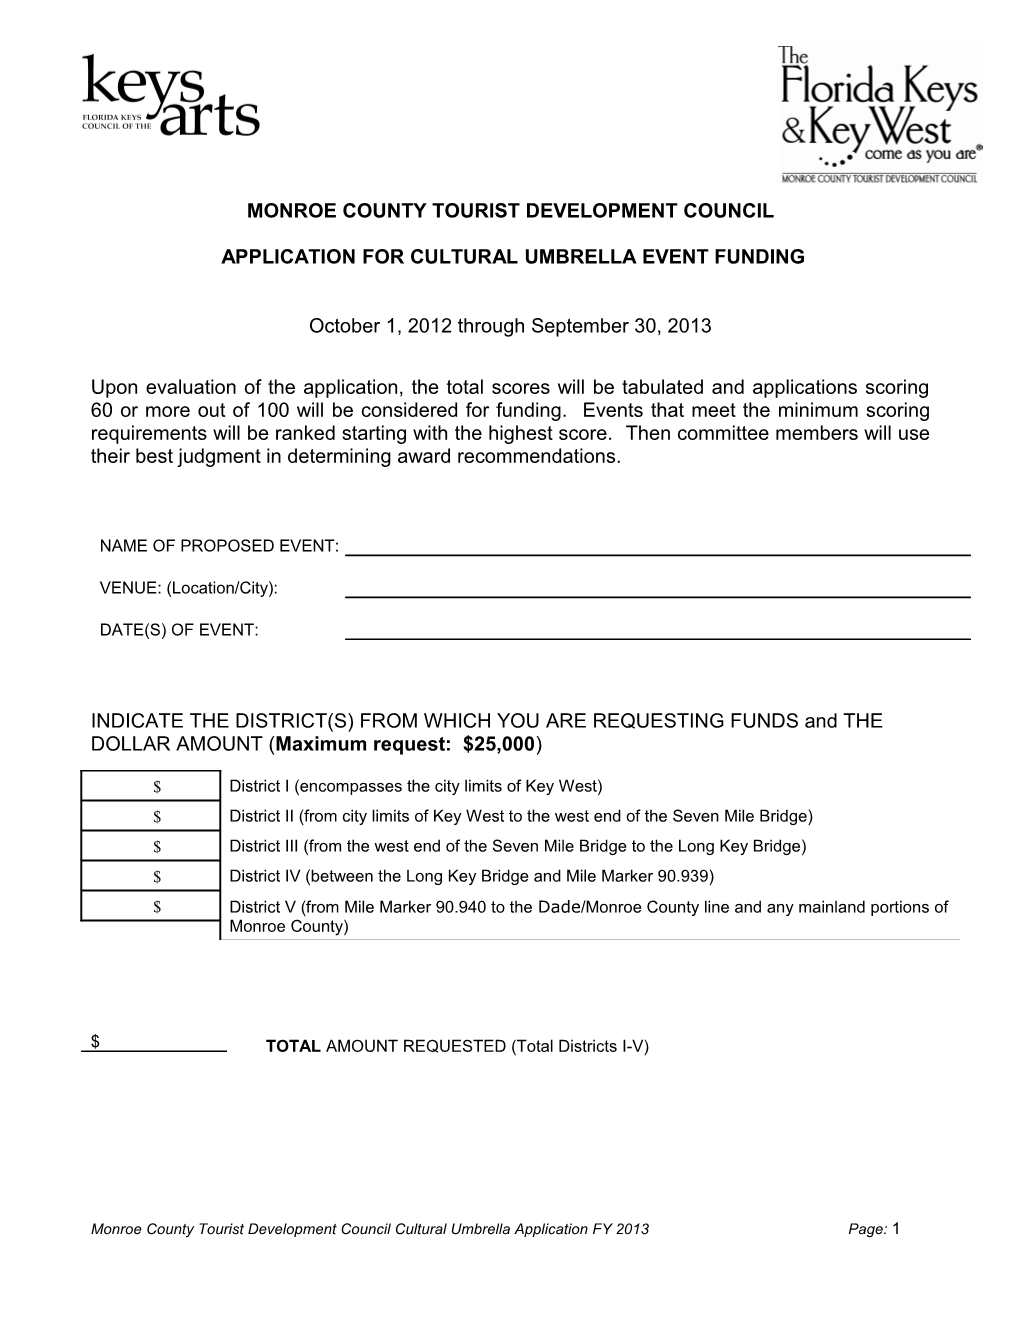 Monroe County Tourist Development Council Application for Cultural Umbrella Event Funding